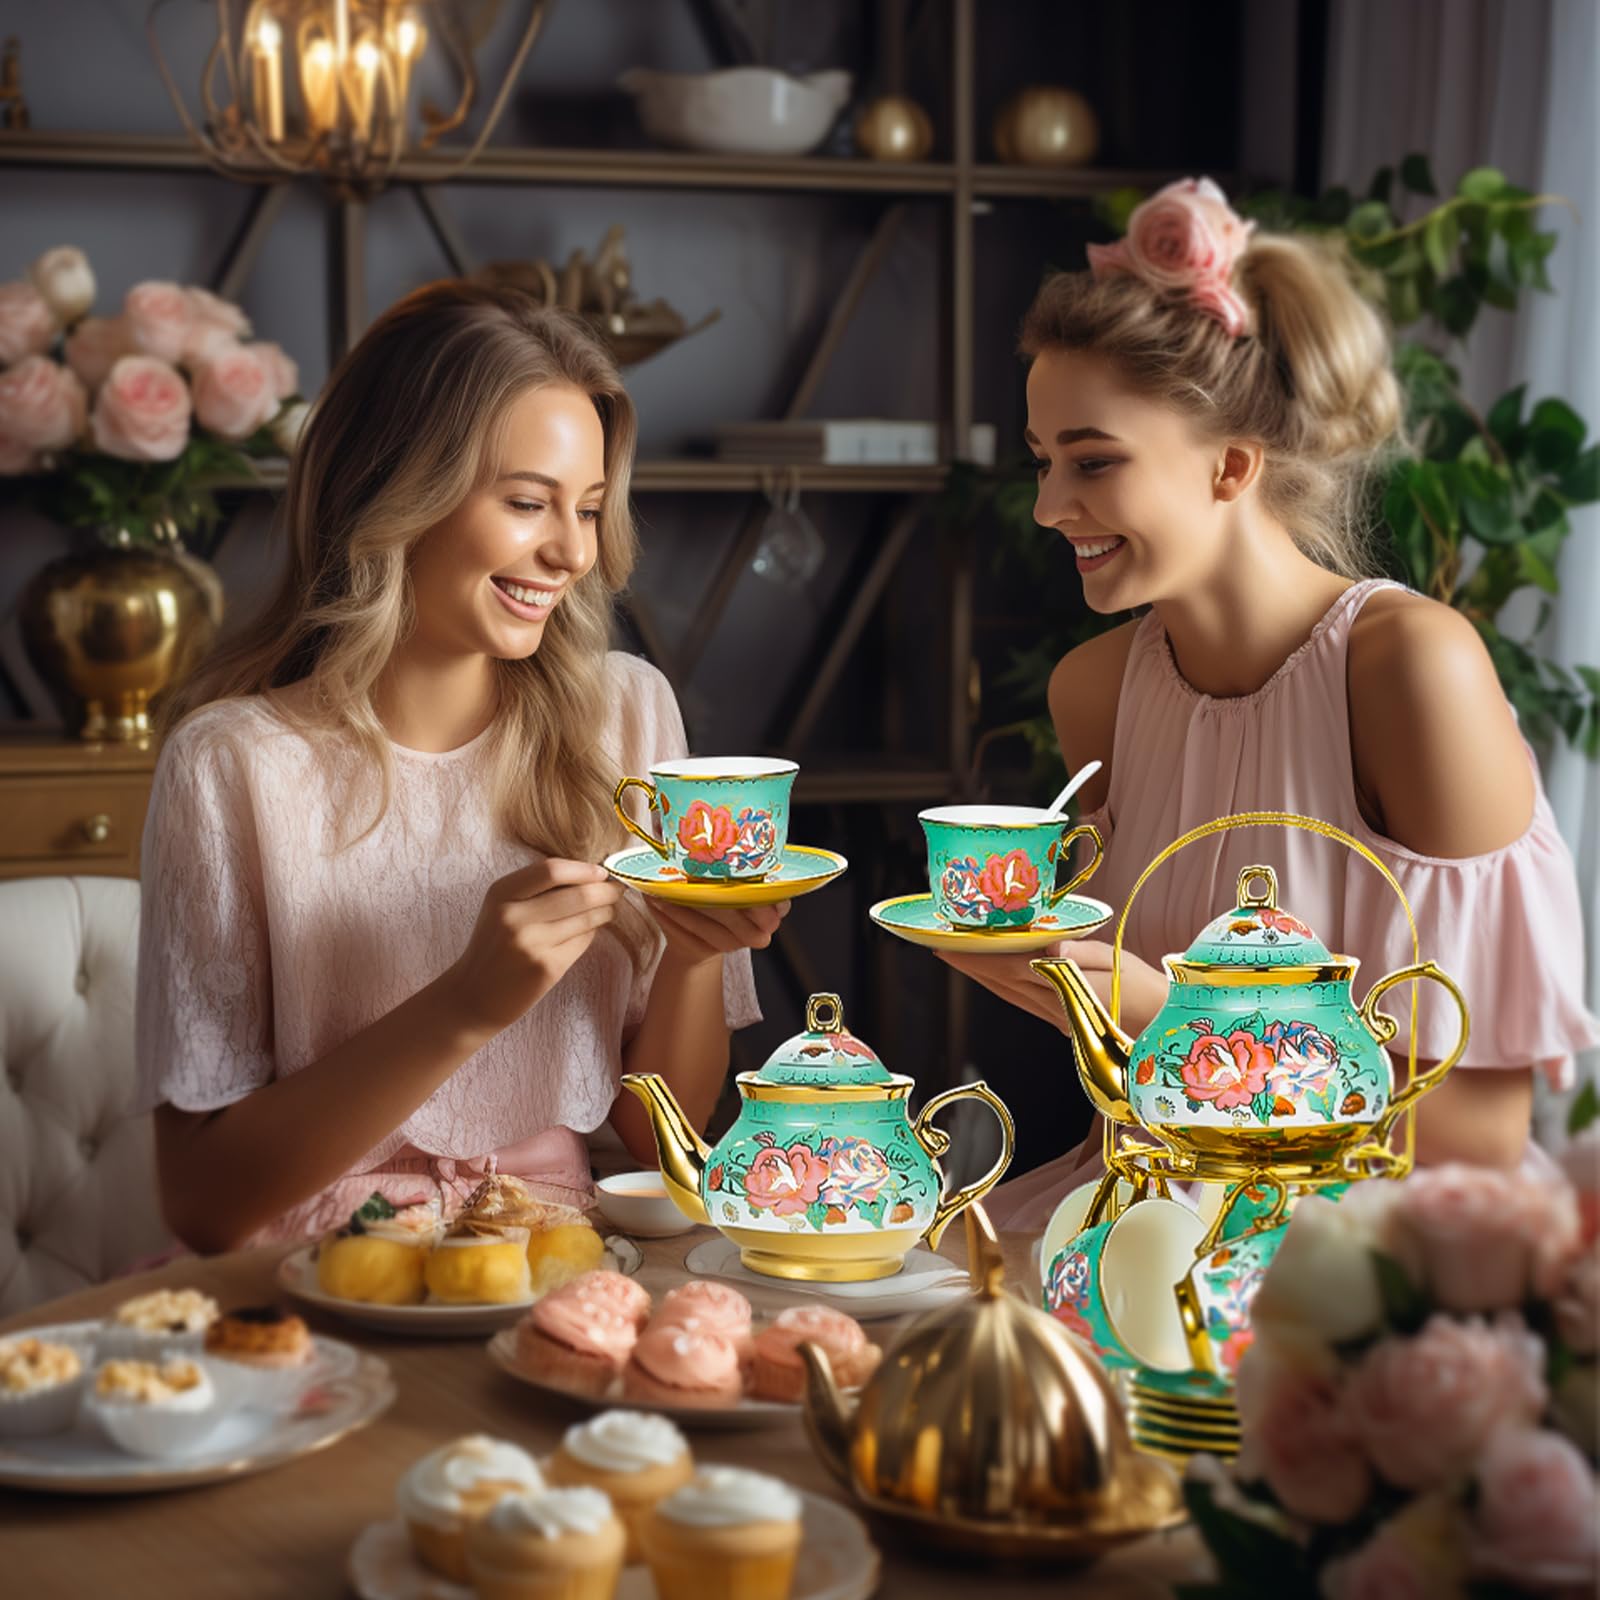 20 Pieces Porcelain Tea Set With Metal Holder, European Ceramic tea set for adults,Flower Tea Set,Tea Set For Women With Flower Painting (Large version, Green)